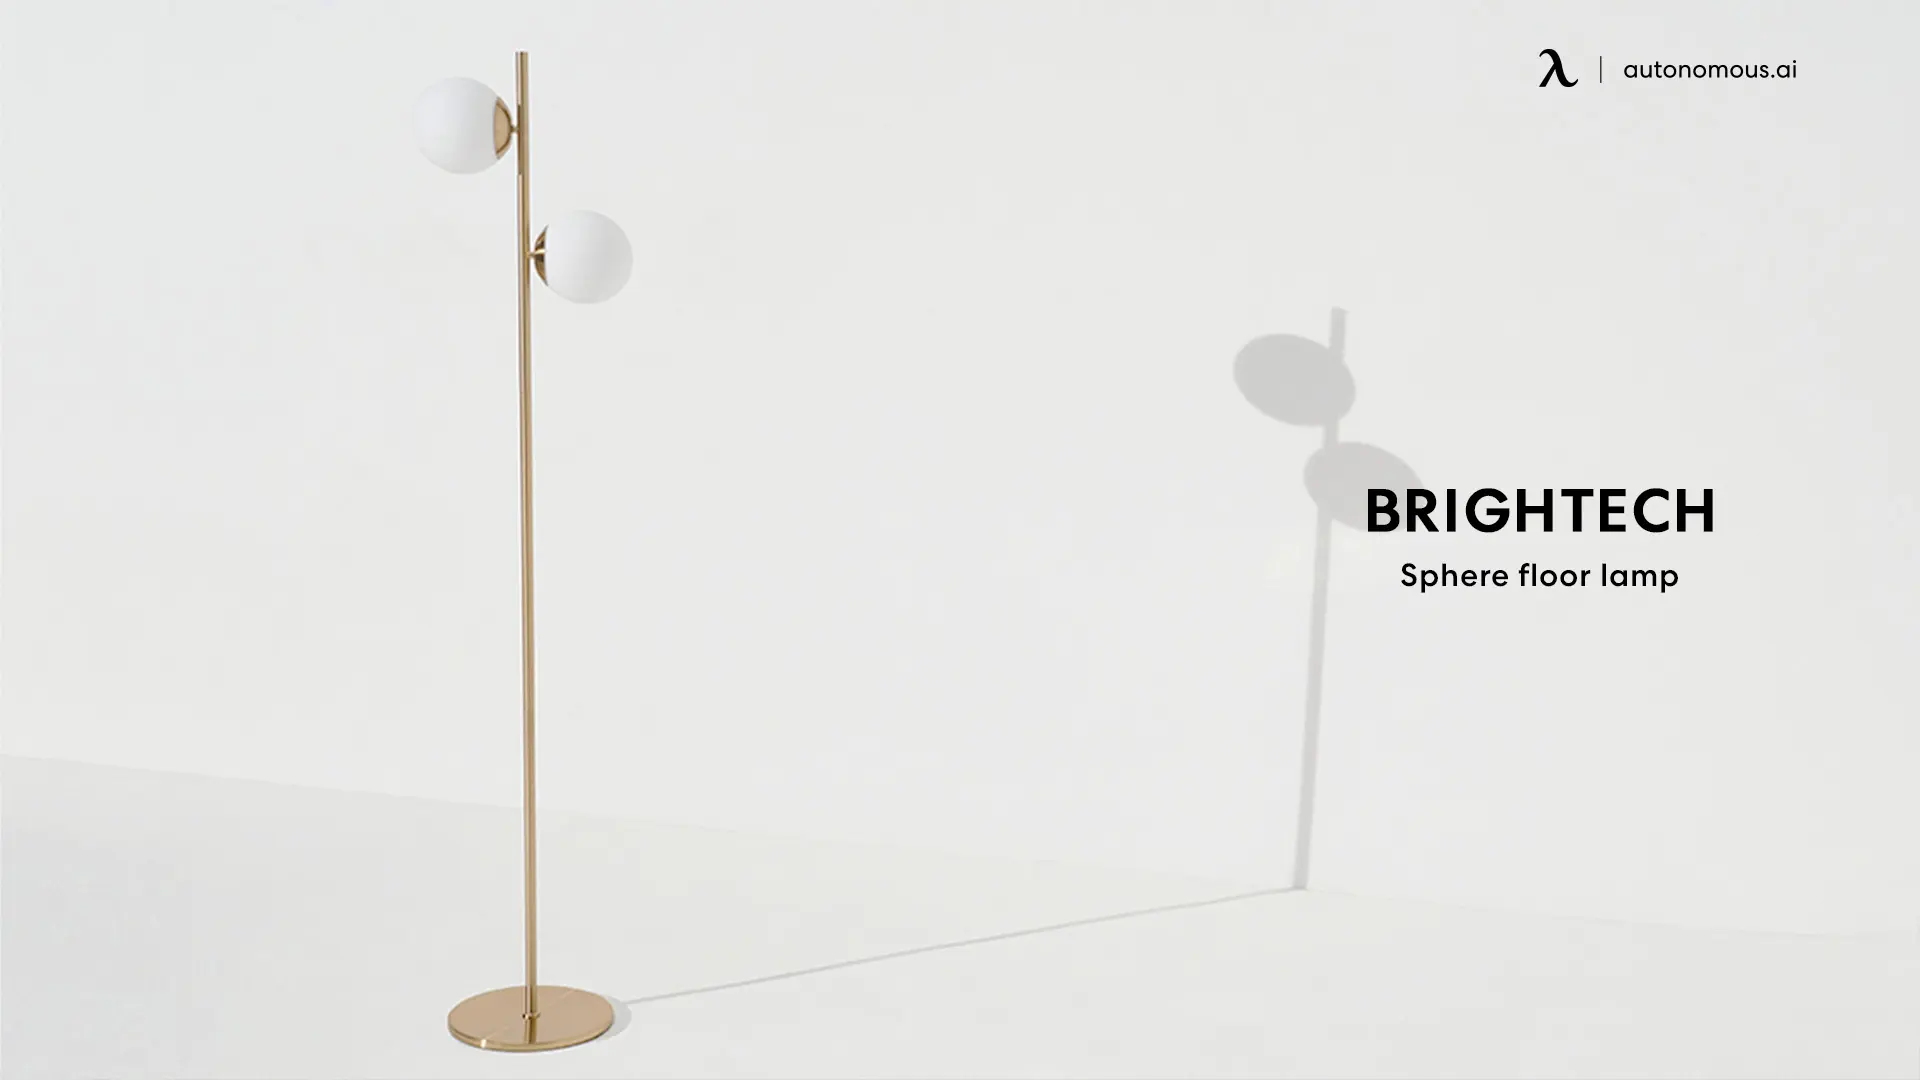 Sphere Floor Lamp by Brightech